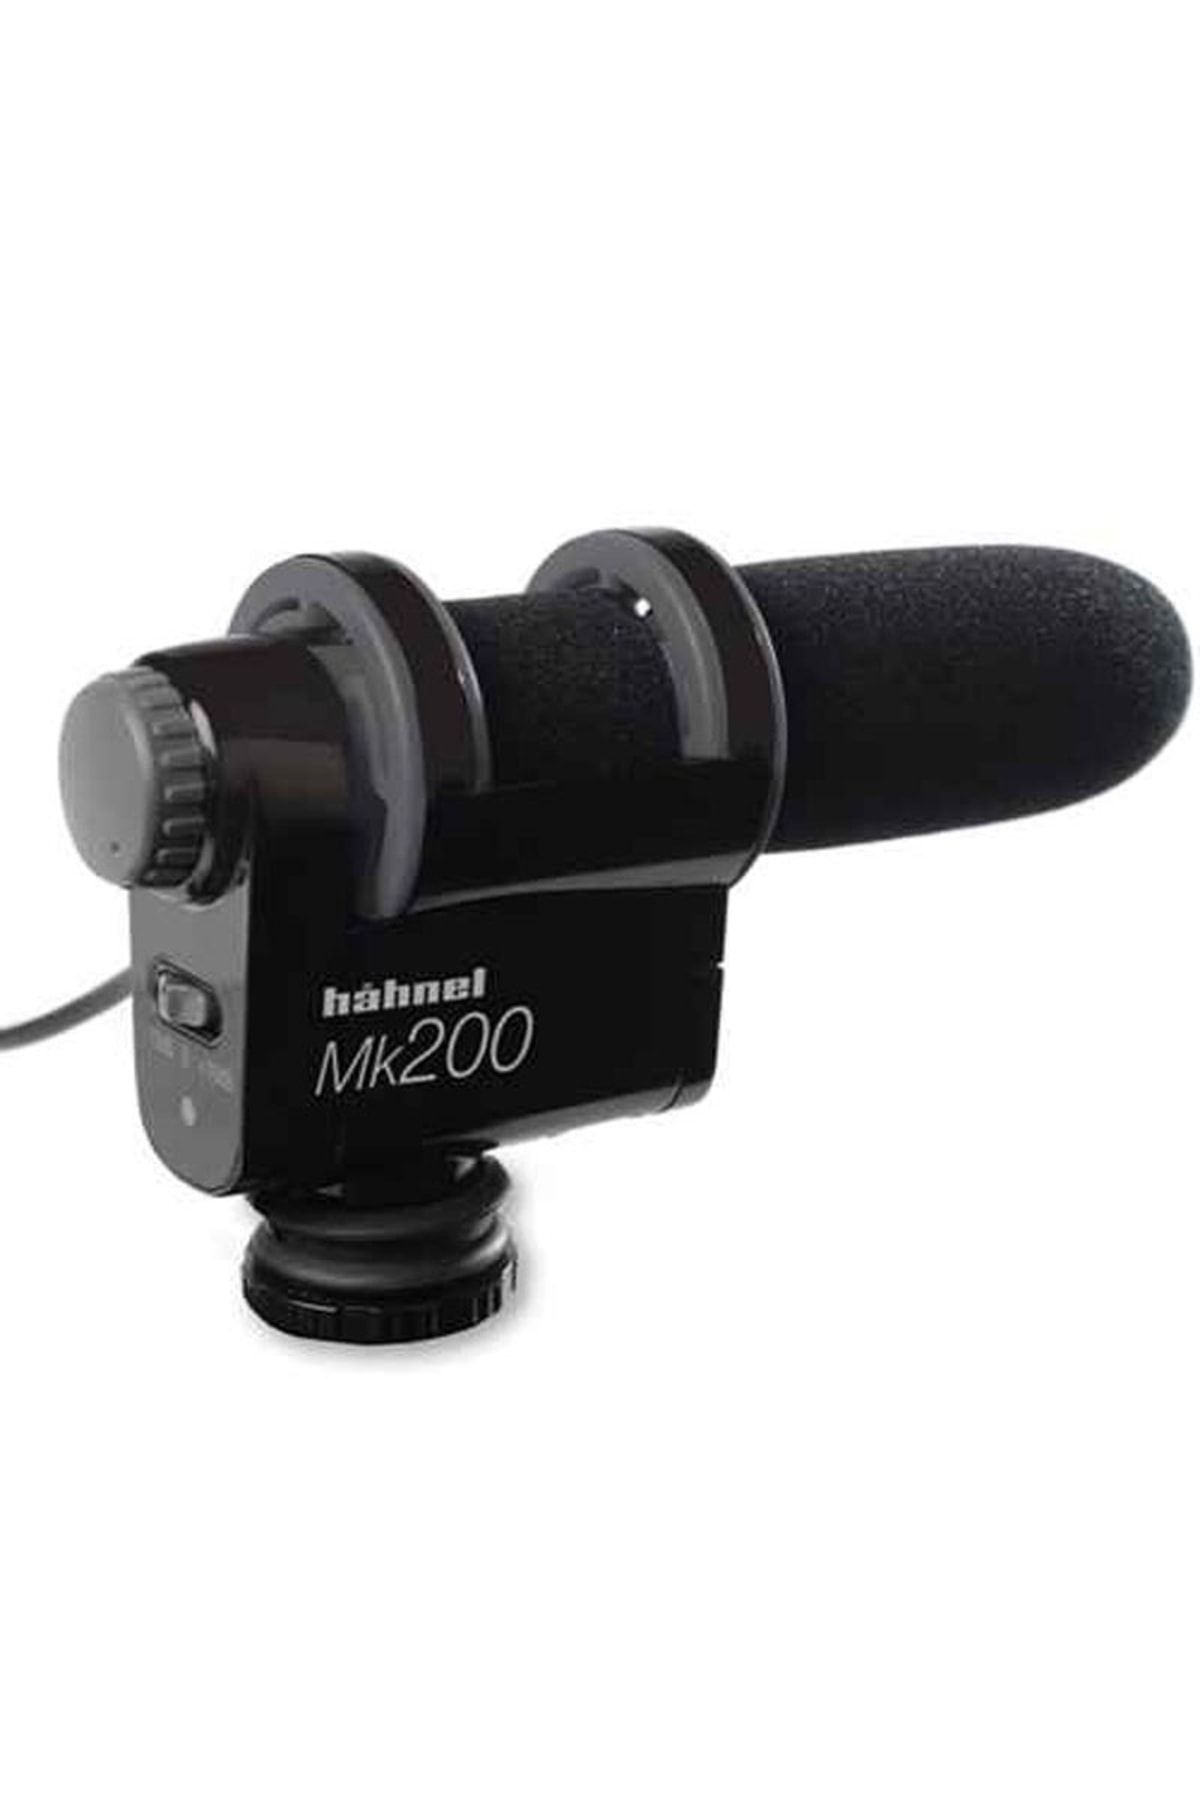 HAHNEL Hähnel Mk200 Microphone For Dslrs